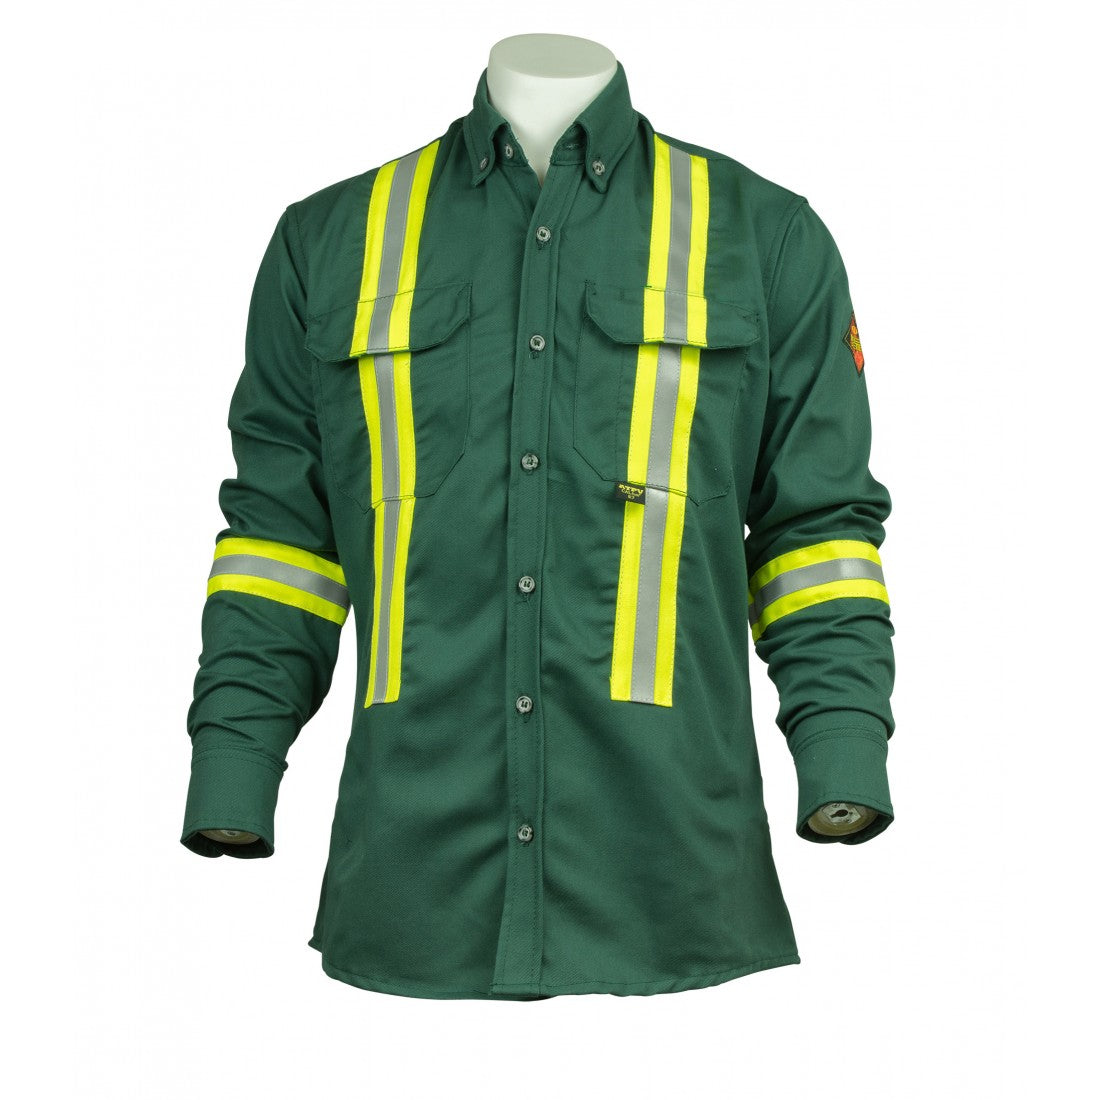 KELTEK A7938S 7oz Flame Resistant Work Shirt (W/ Reflective) | Green | S-5XL (HRC 2) Flame Resistant Work Wear - Cleanflow